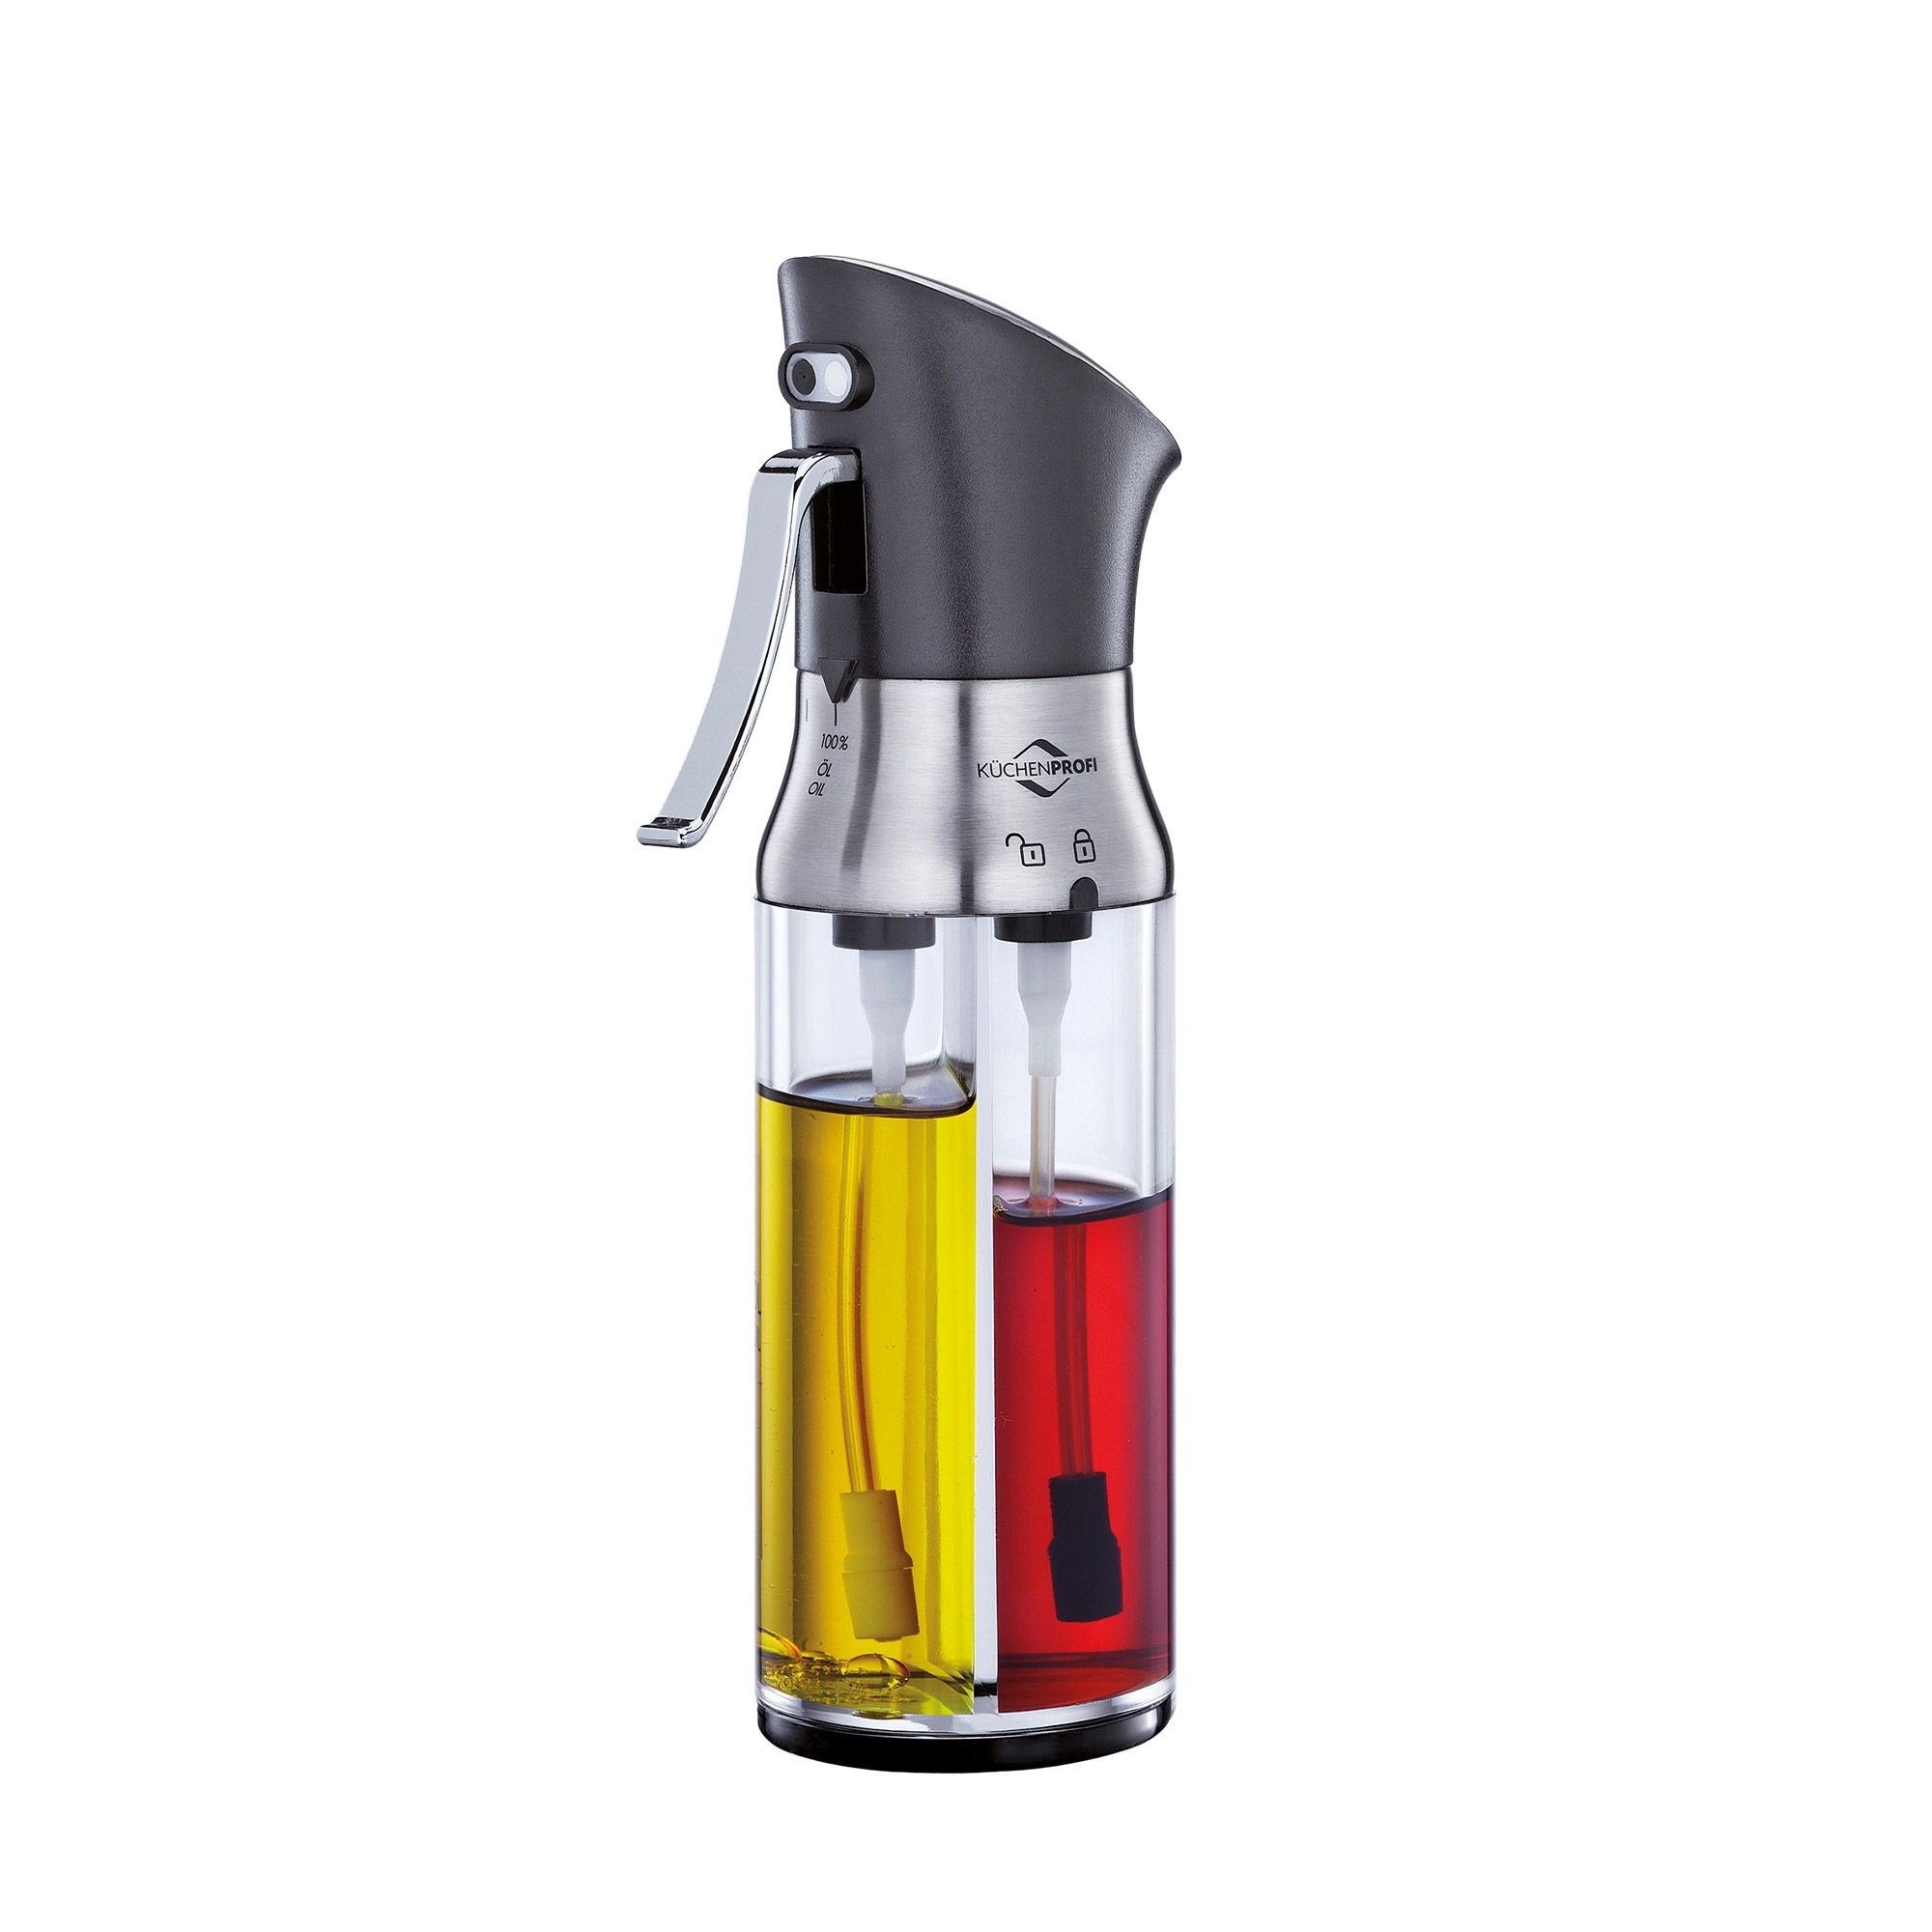 Küchenprofi - vinegar sprayer/oil dispenser SIENA